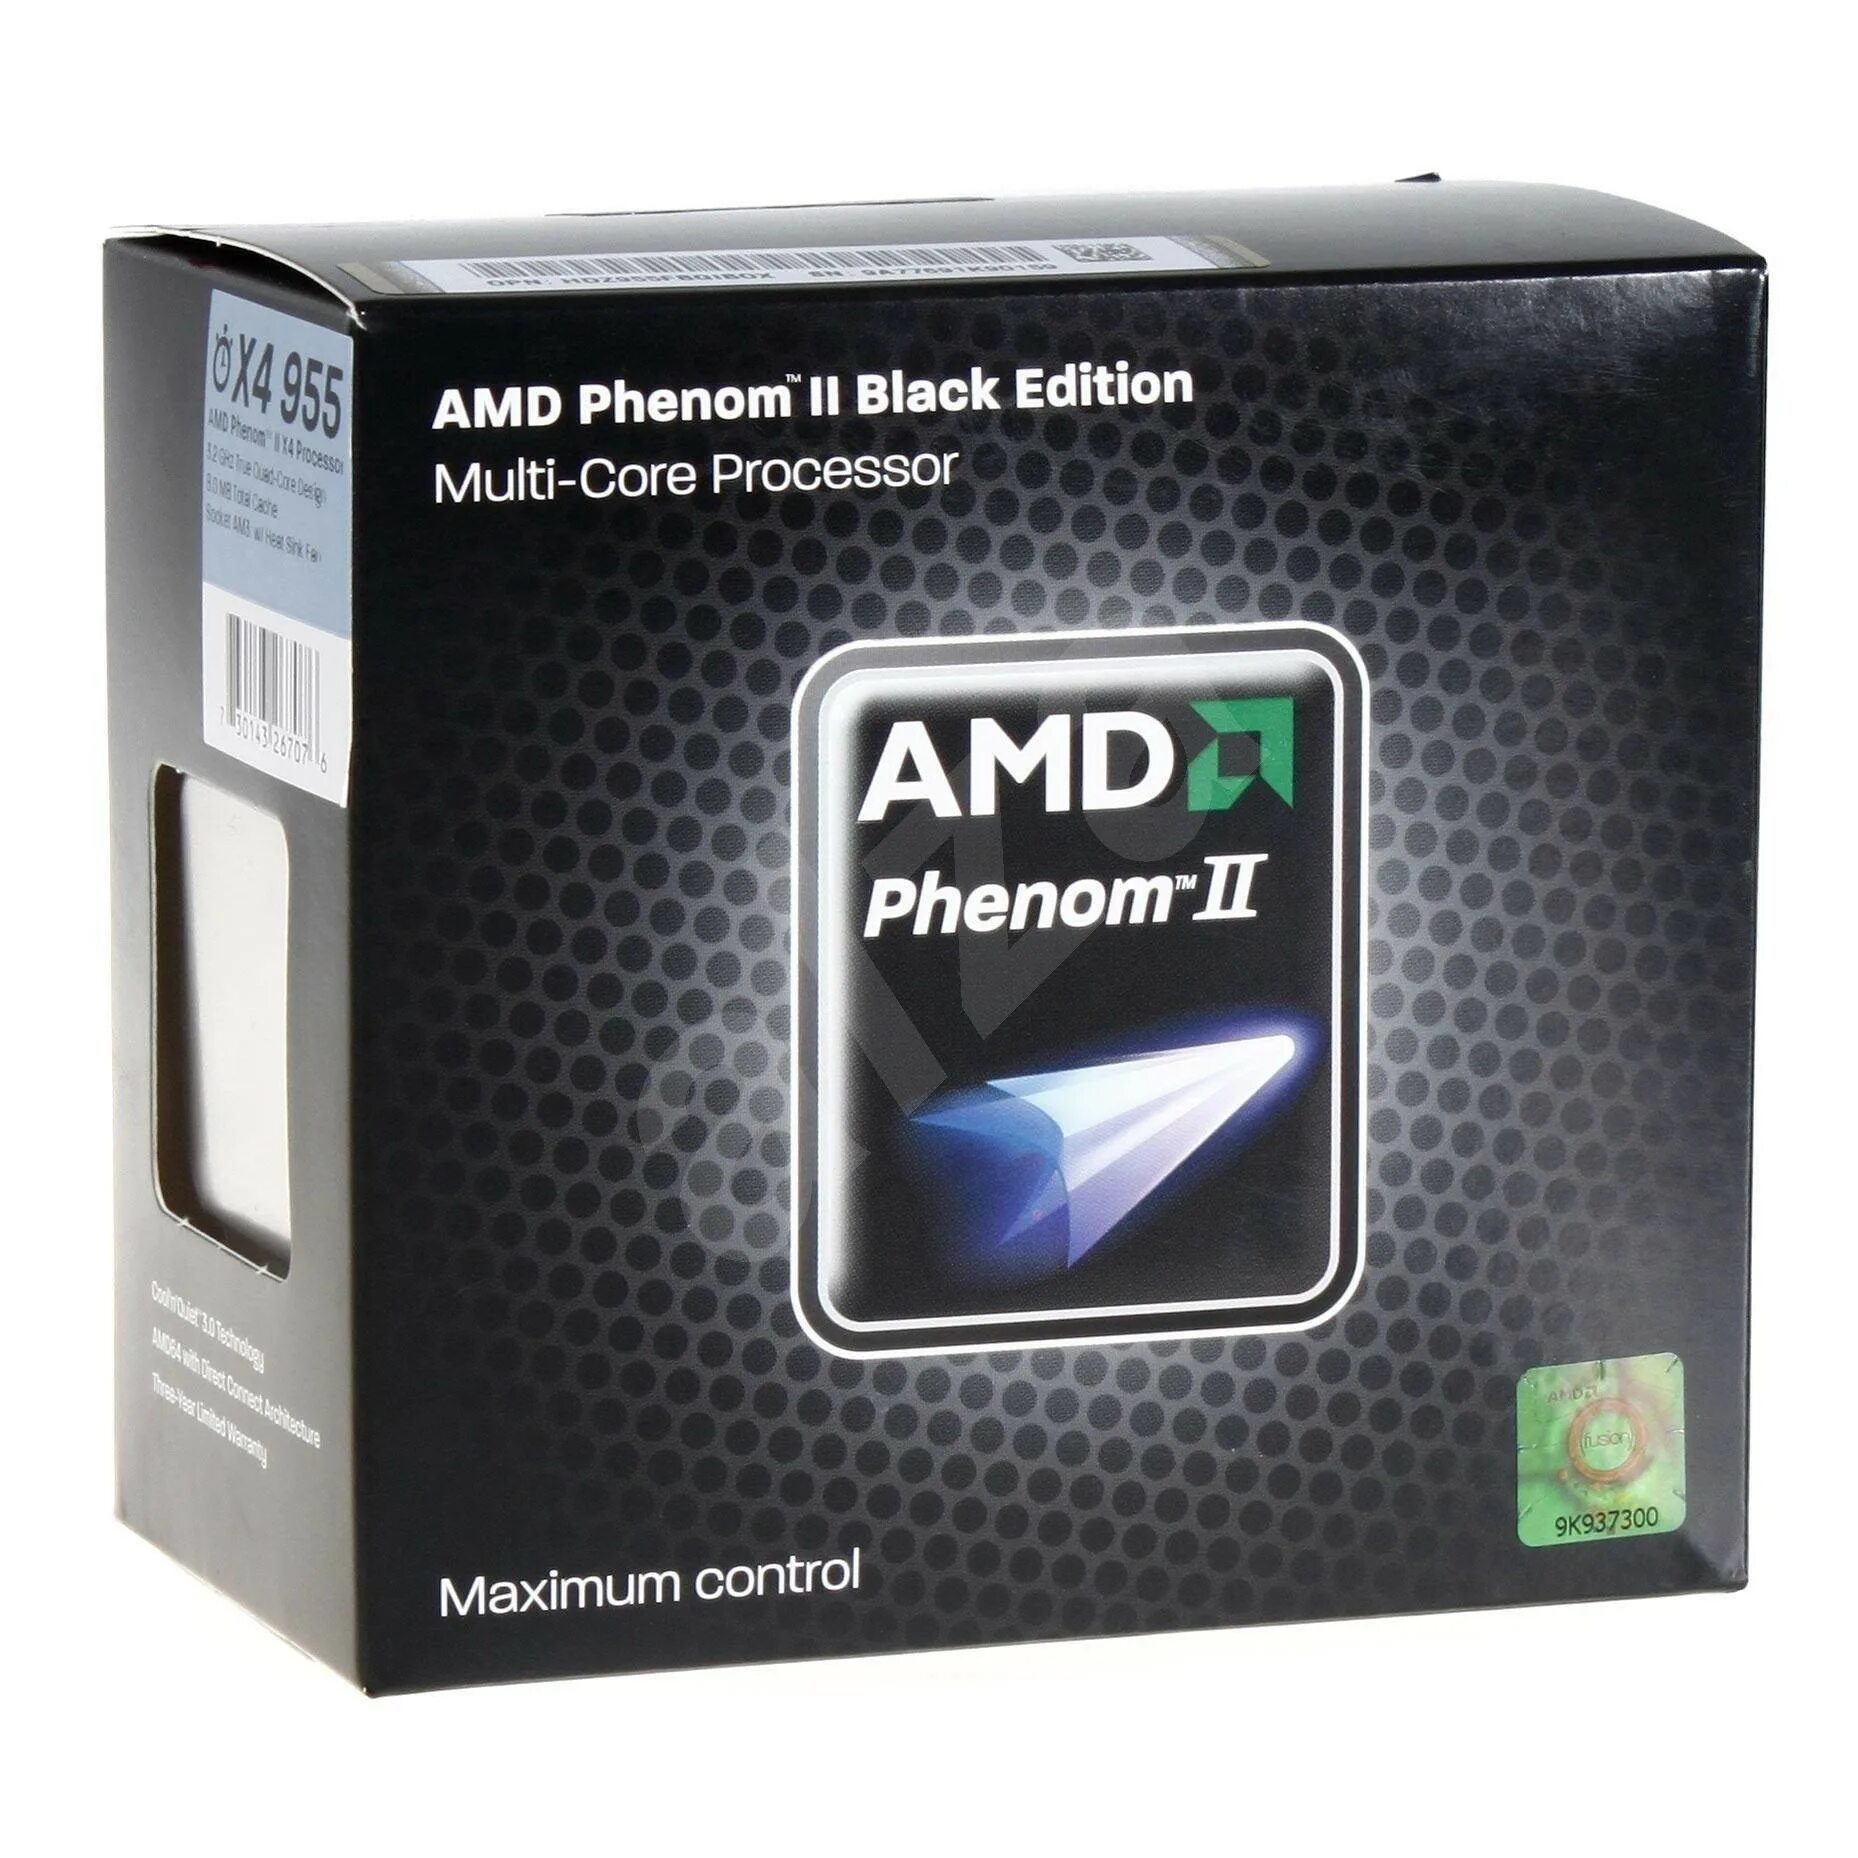 Phenom ii black edition